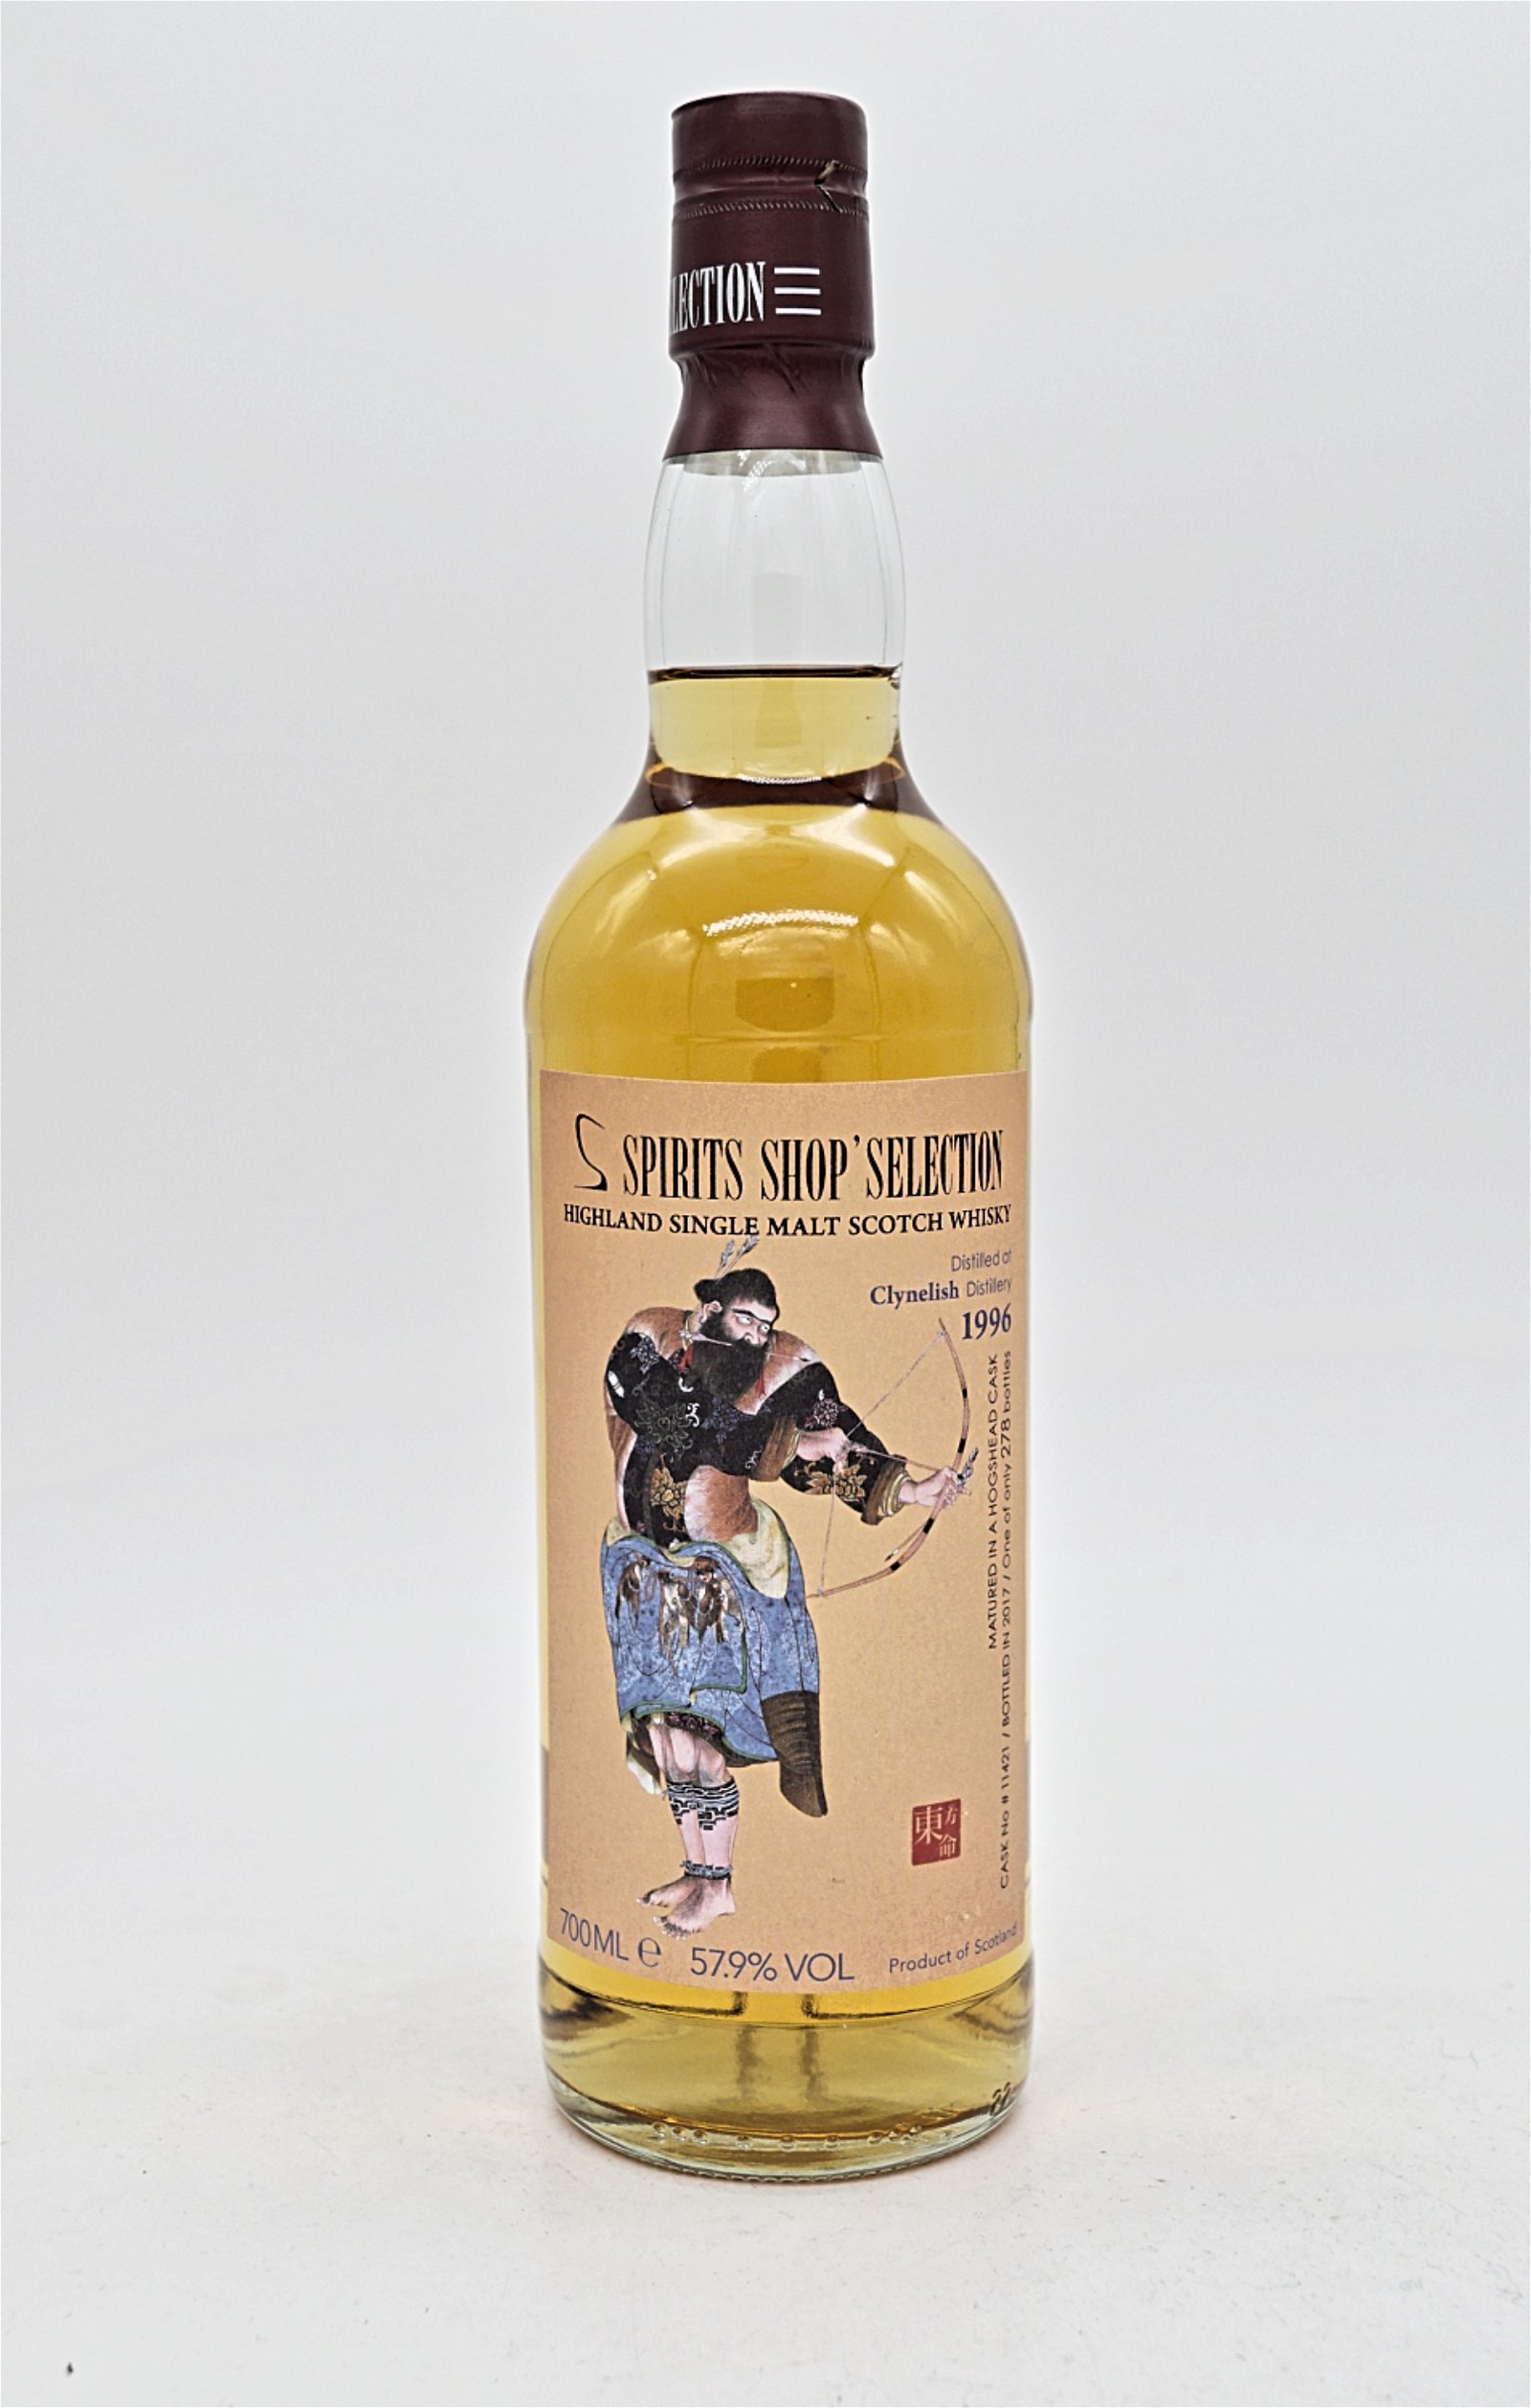 S-Spirits Shop Selection 21 Jahre Clynelish 1996 Cask #11421 Highland Single Malt Scotch Whisky